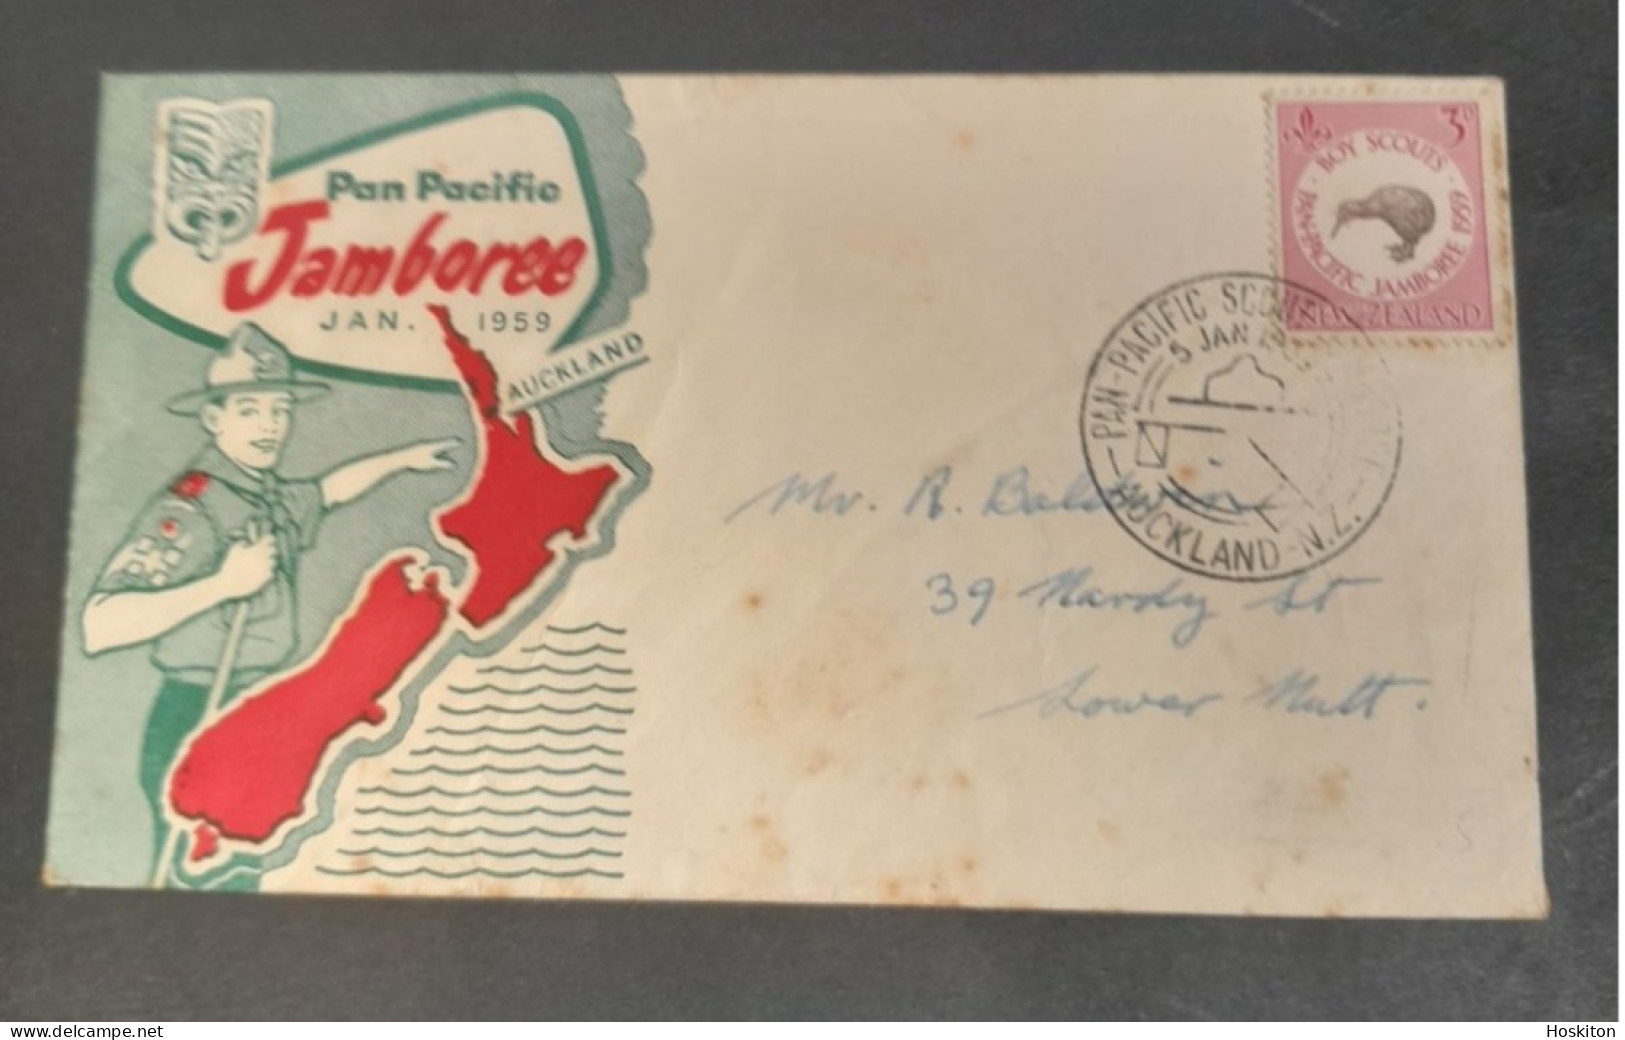 Pan Pacific Jamboree 1959 Auckland NZ - Storia Postale